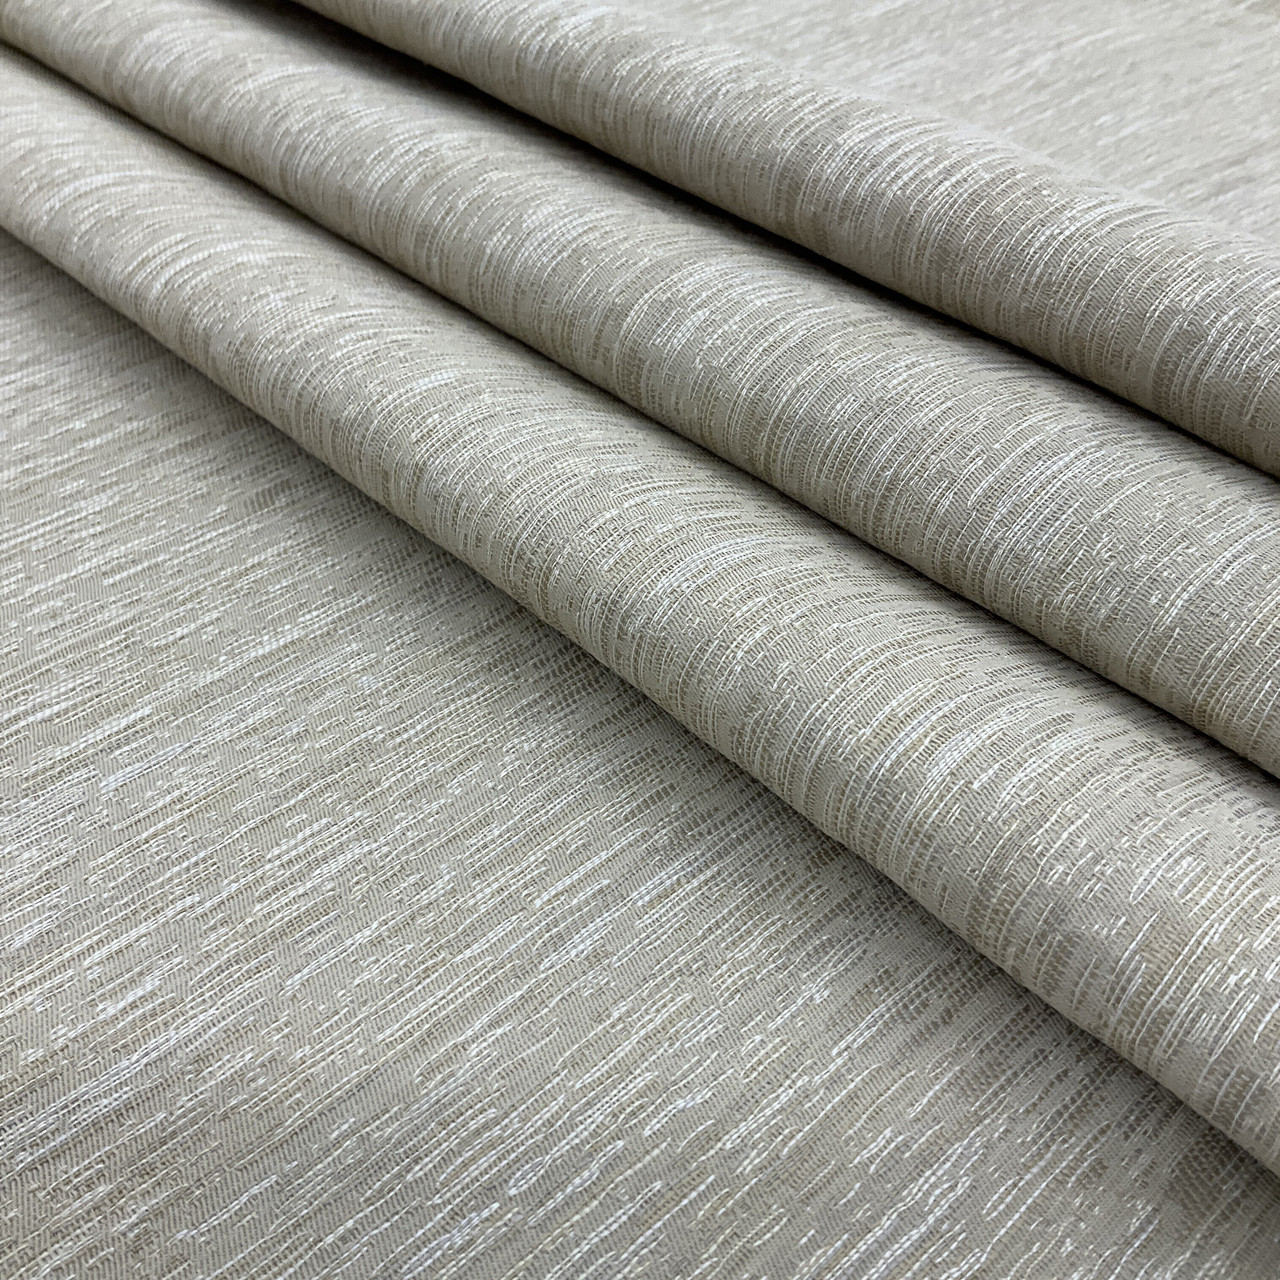 Granite in color Sandstone, Sandy Beige, Medium Weight Upholstery /  Slipcover Fabric, 54 Wide